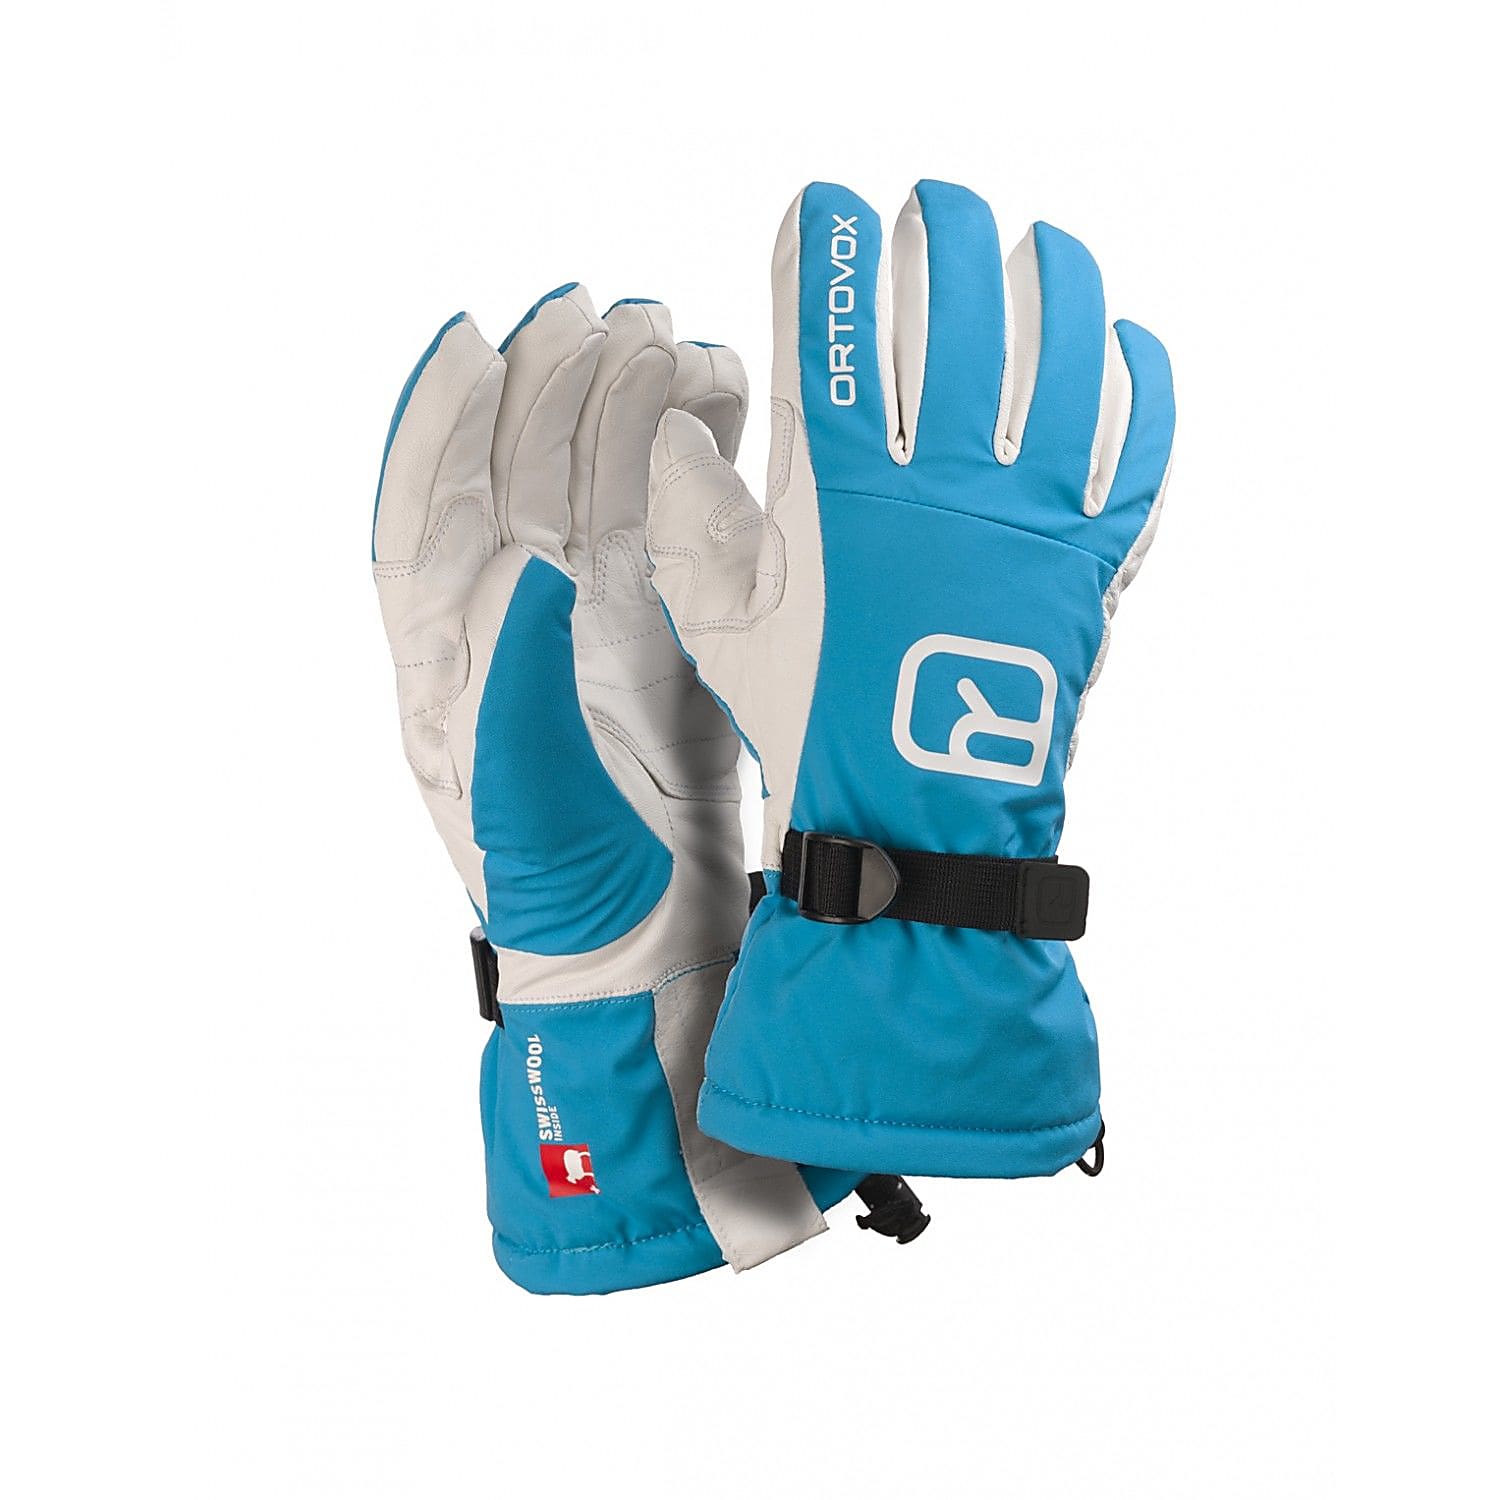 Характеристики горнолыжные перчатки унисекс Ortovox Freeride Blue Lagoon (XS)